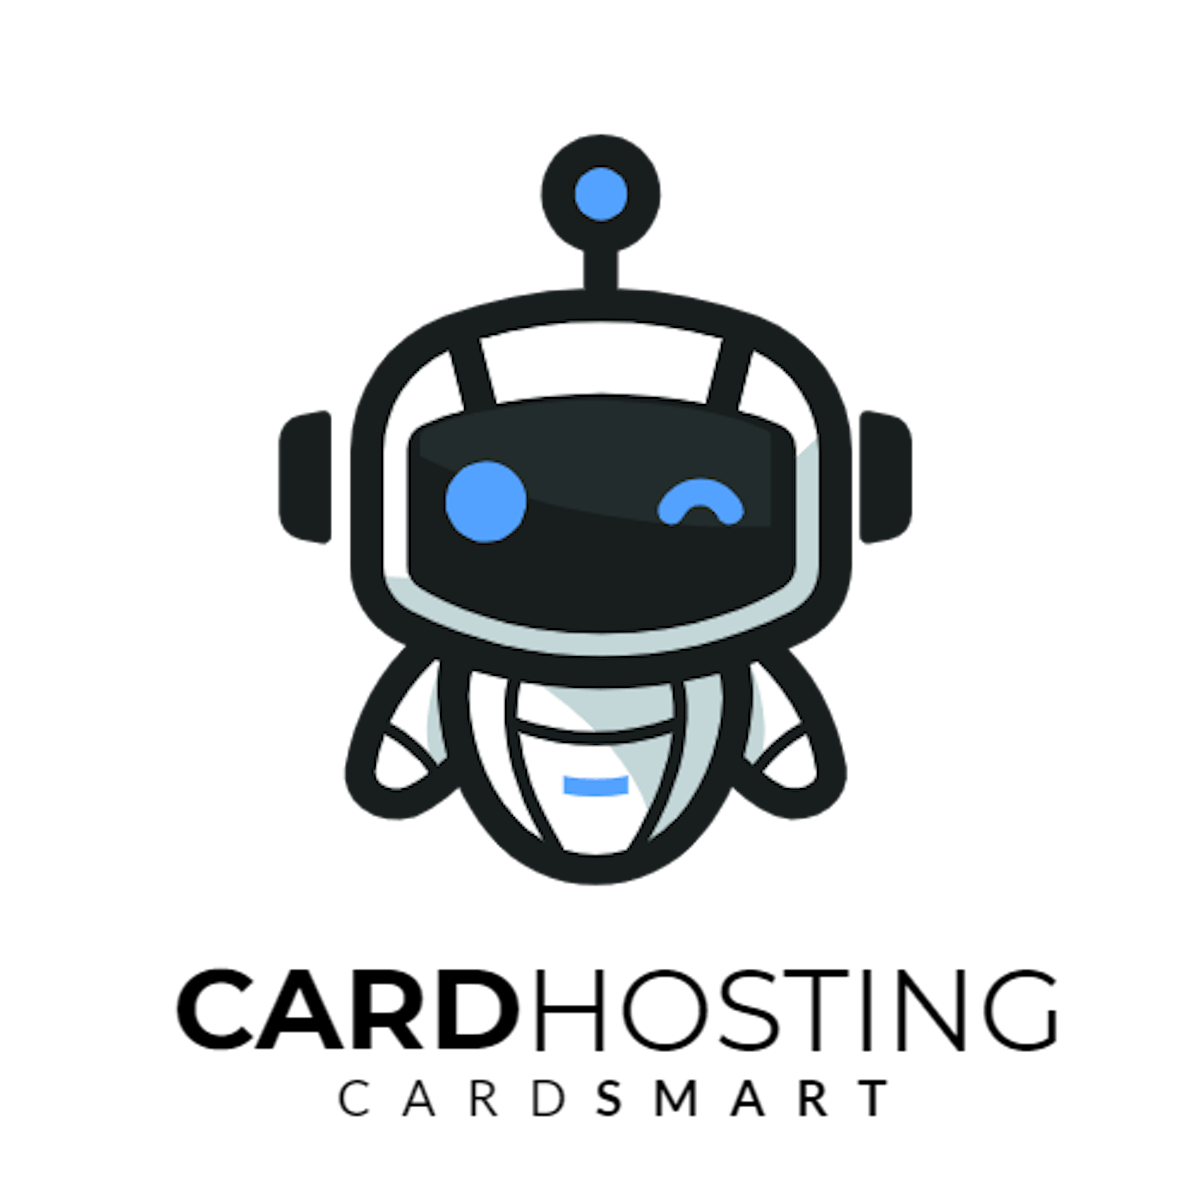 Premium Card Hosting with Card Editing & Marketing Tools